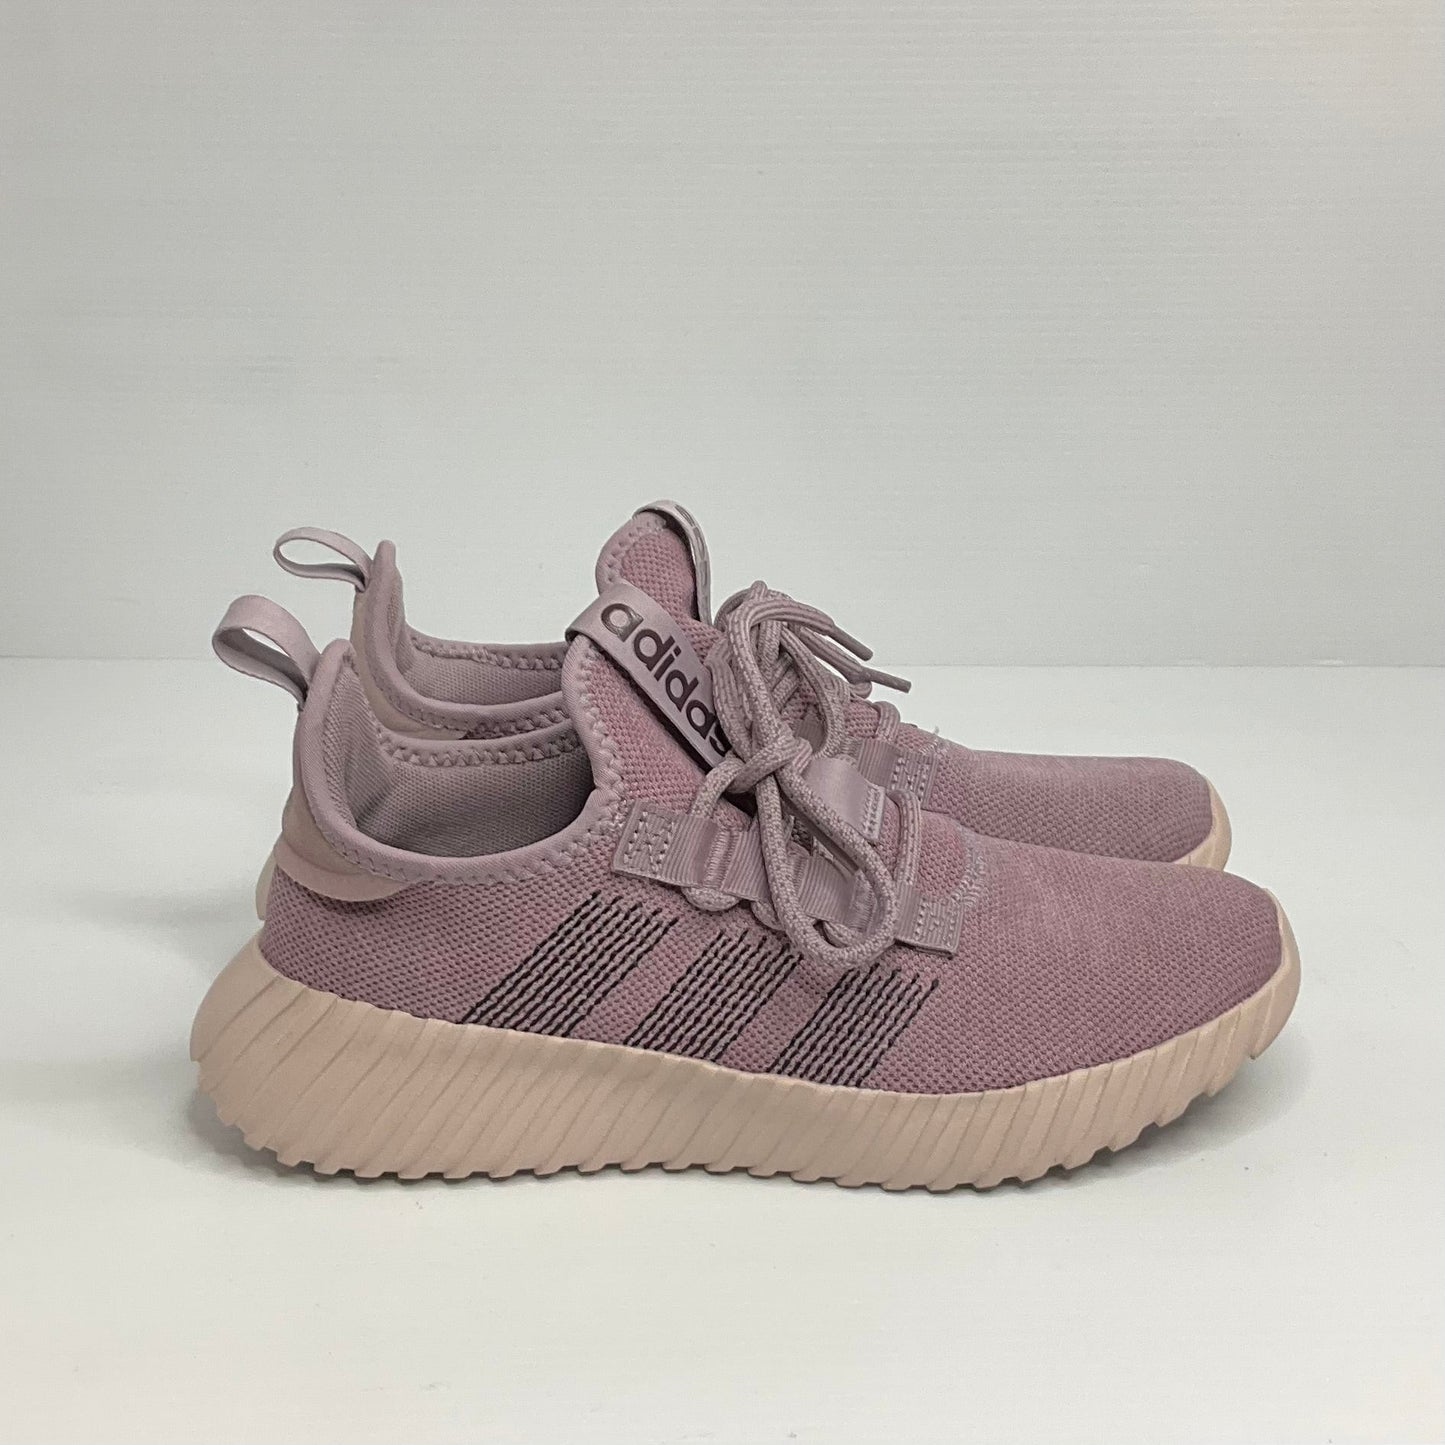 Purple Shoes Athletic Adidas, Size 8.5